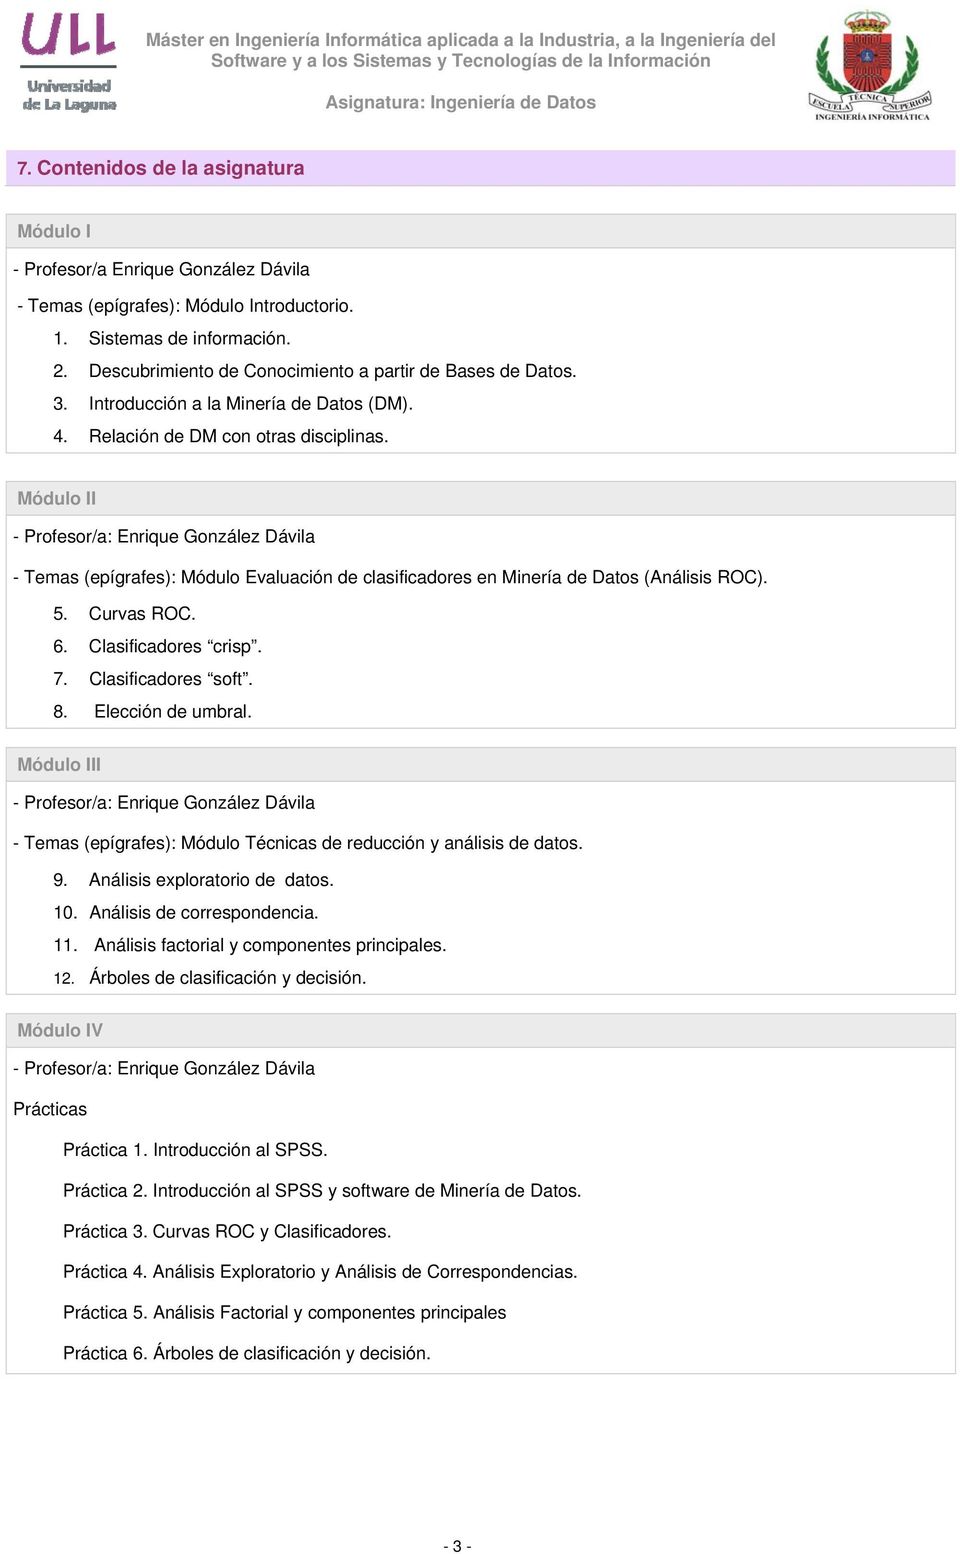 Módulo II - Profesor/a: Enrique González Dávila - Temas (epígrafes): Módulo Evaluación de clasificadores en Minería de Datos (Análisis ROC). 5. Curvas ROC. 6. Clasificadores crisp. 7.